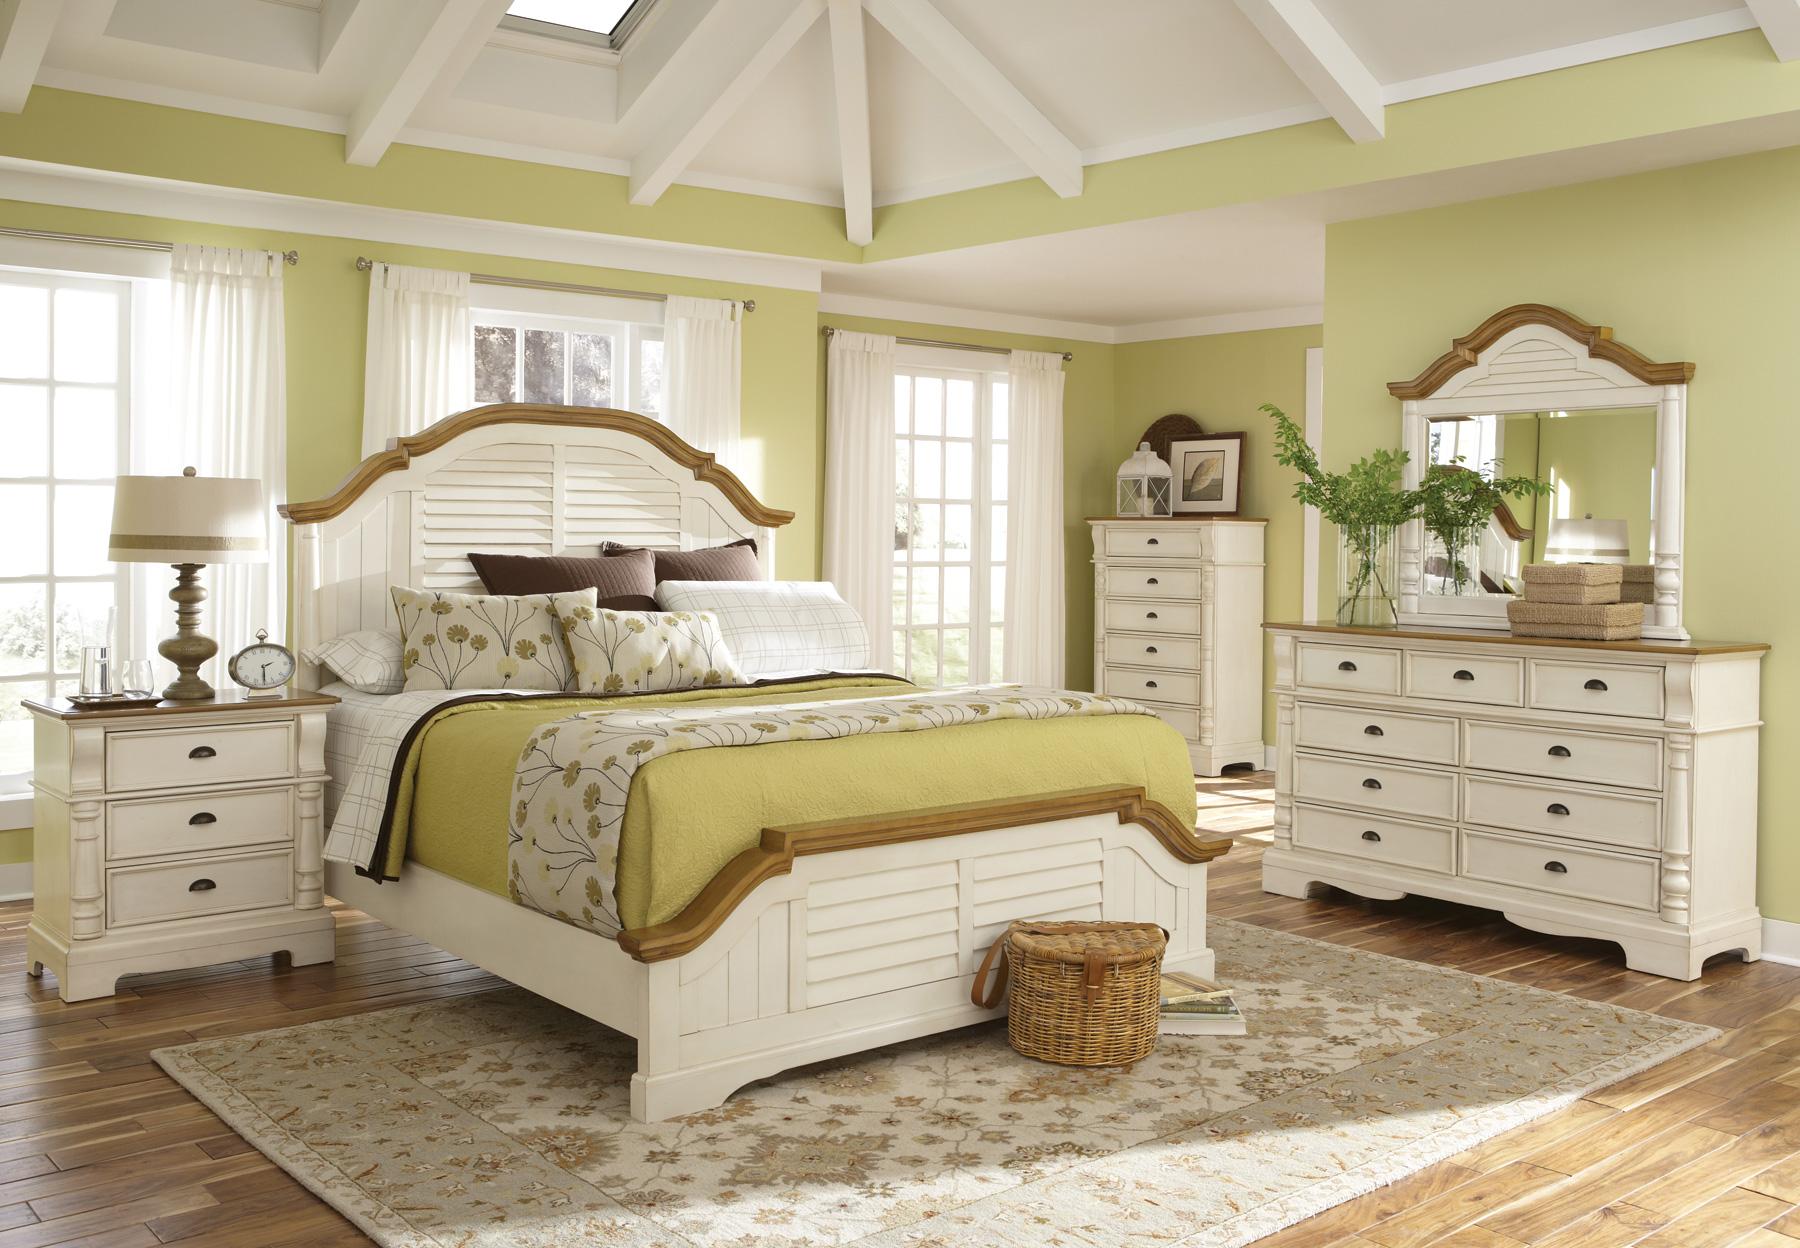 White Modern Bedroom Furniture: A Fresh New Look